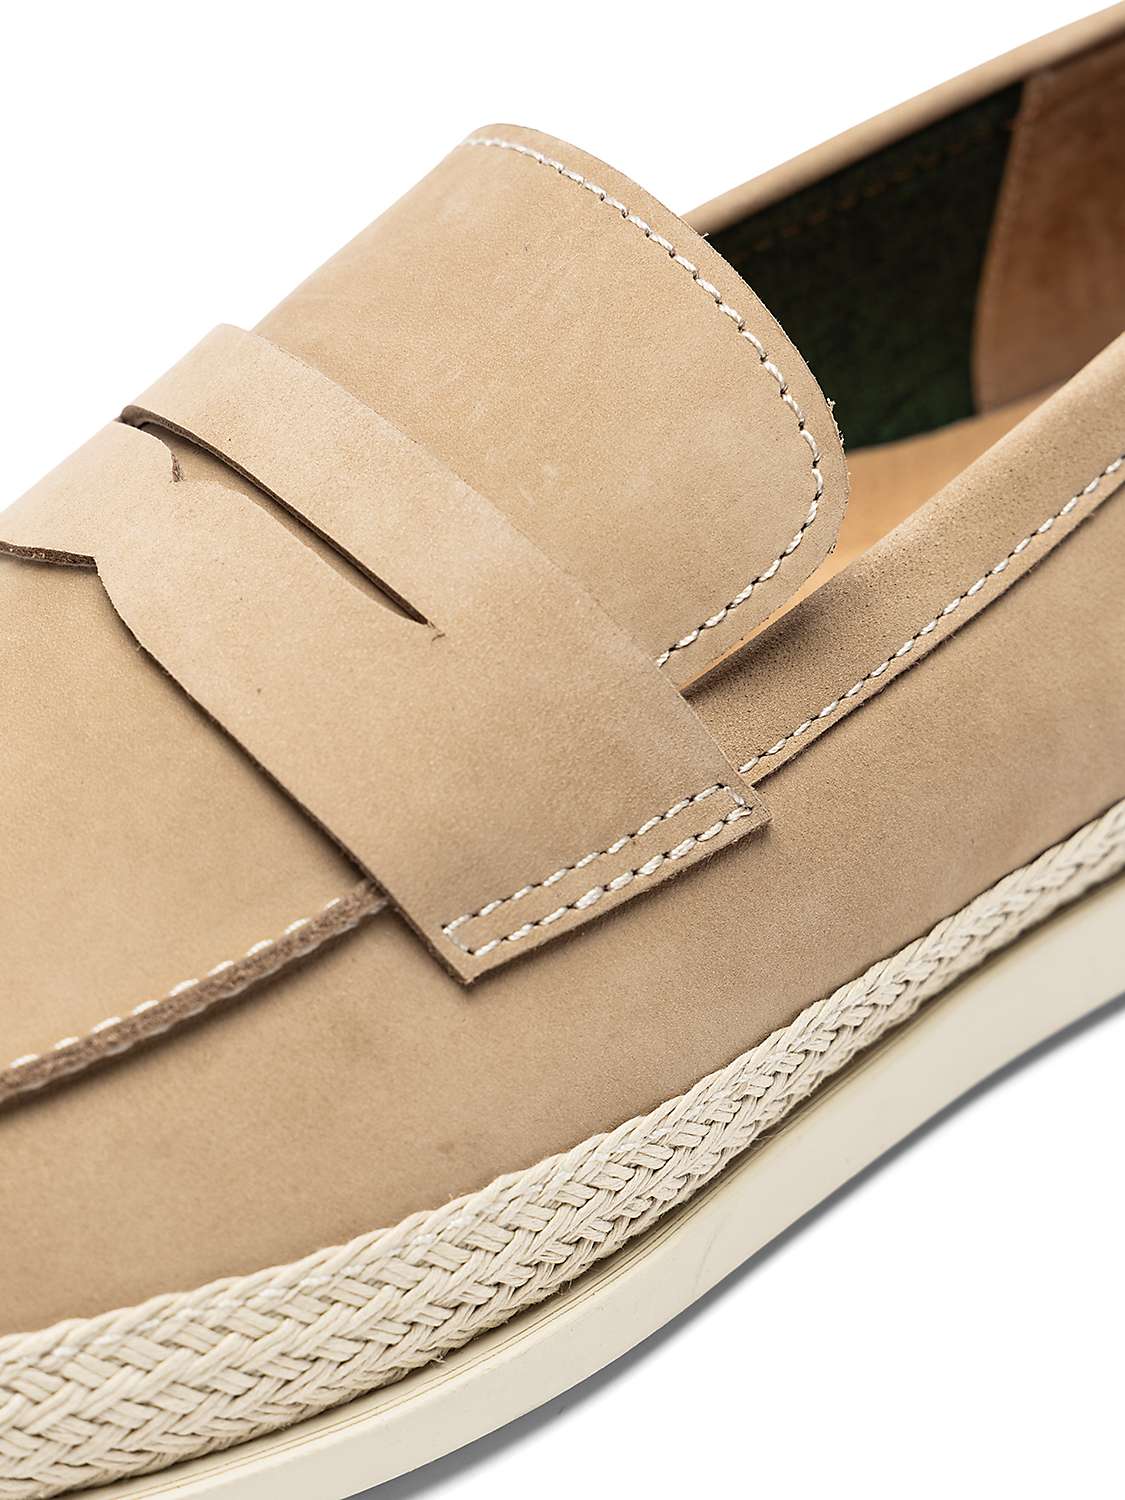 Buy Rodd & Gunn Huaraki Jute Detail Leather Loafers Online at johnlewis.com